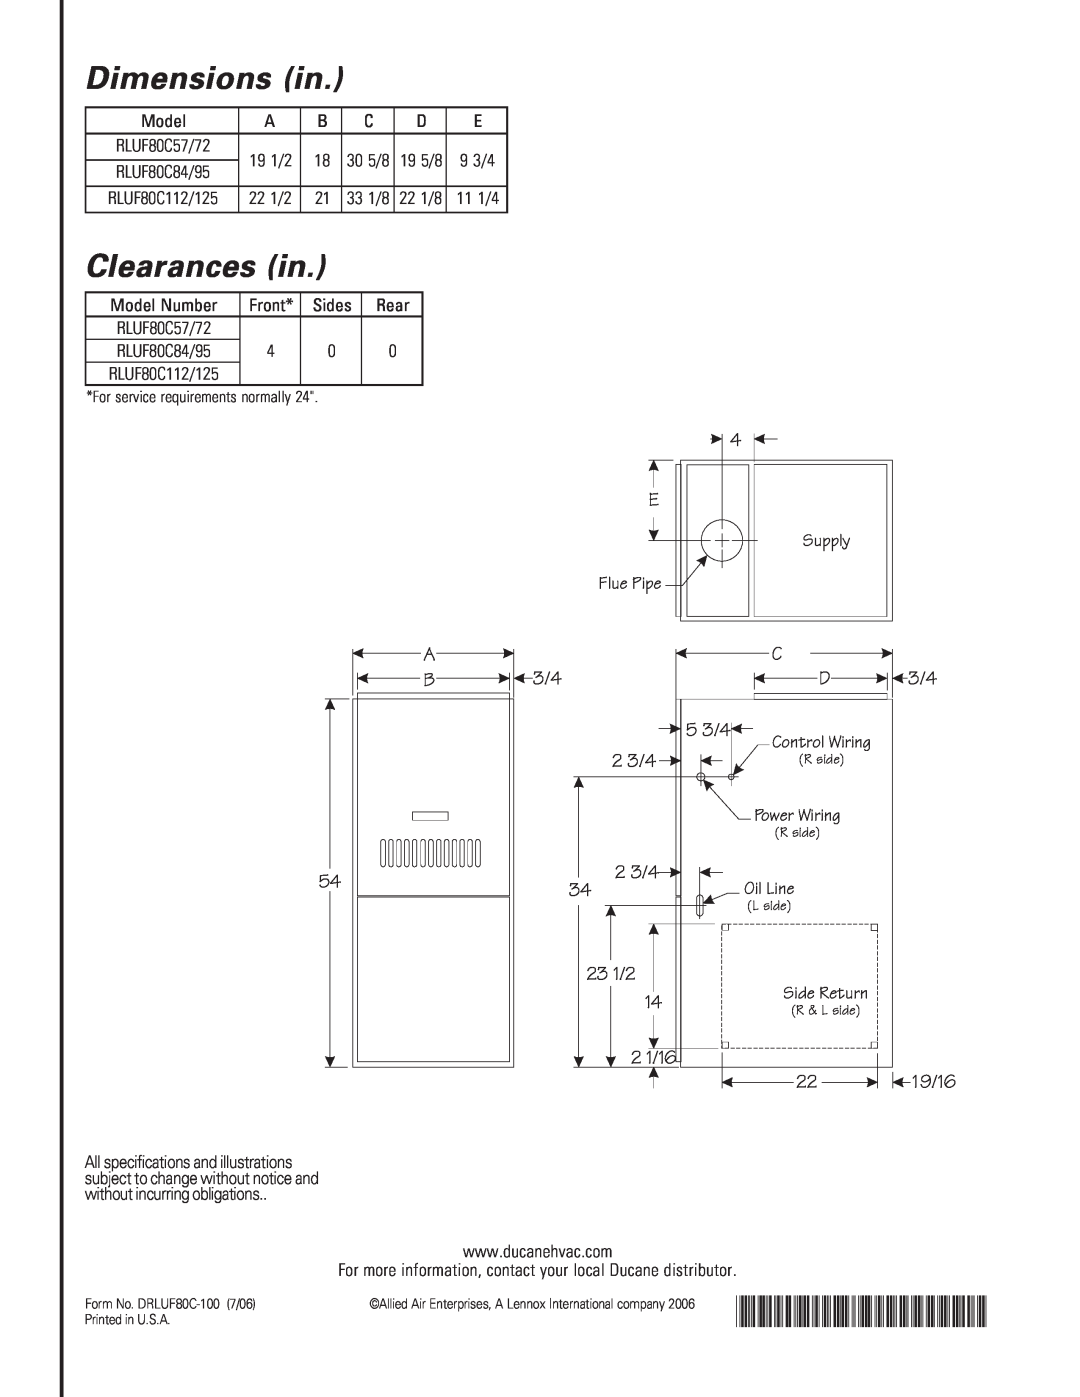 Ducane (HVAC) warranty Dimensions in, Clearances in, DRLUF80C-100-7-06 